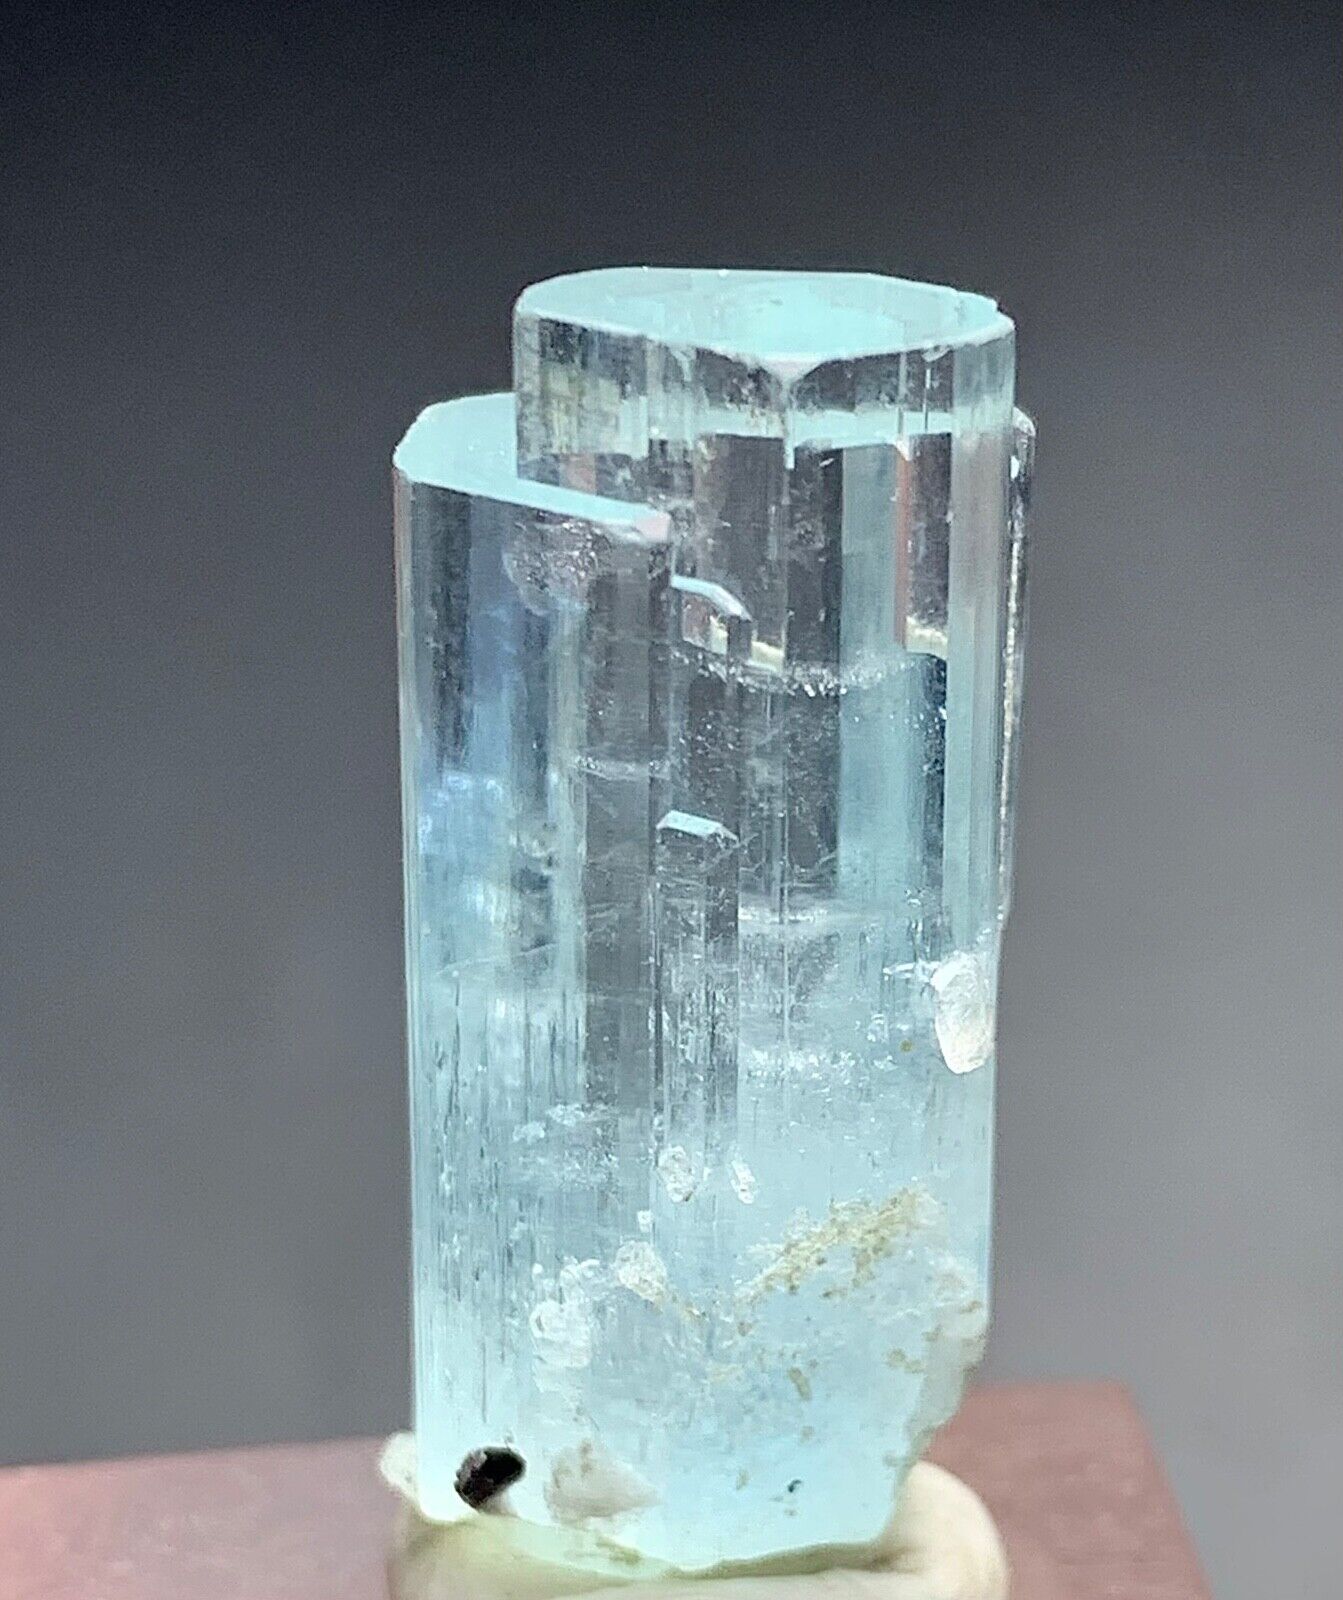 40 Carat Aquamarine Crystal From Skardu Pakistan